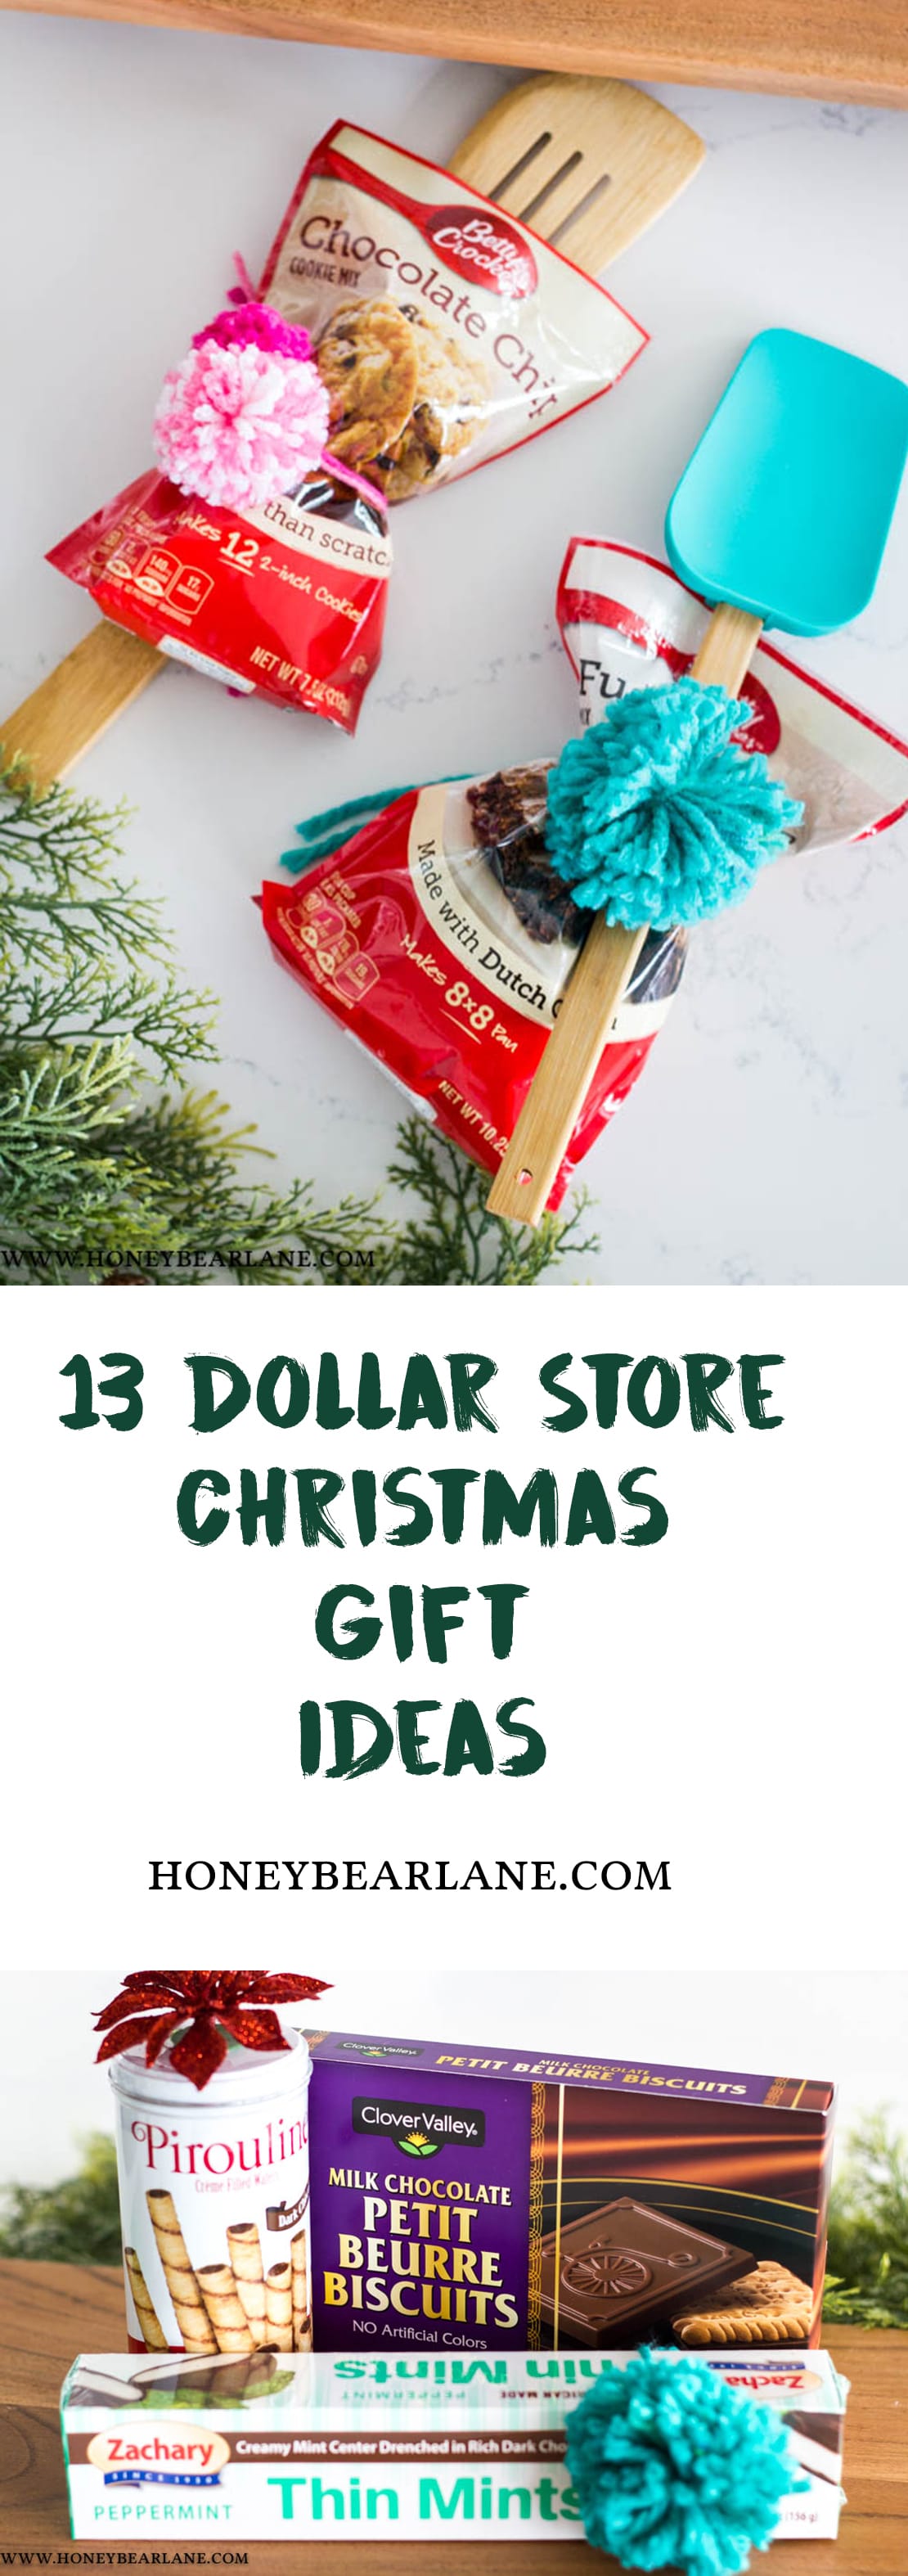 101 gifts under $5  Diy christmas gifts, Christmas stocking stuffers,  Christmas fun